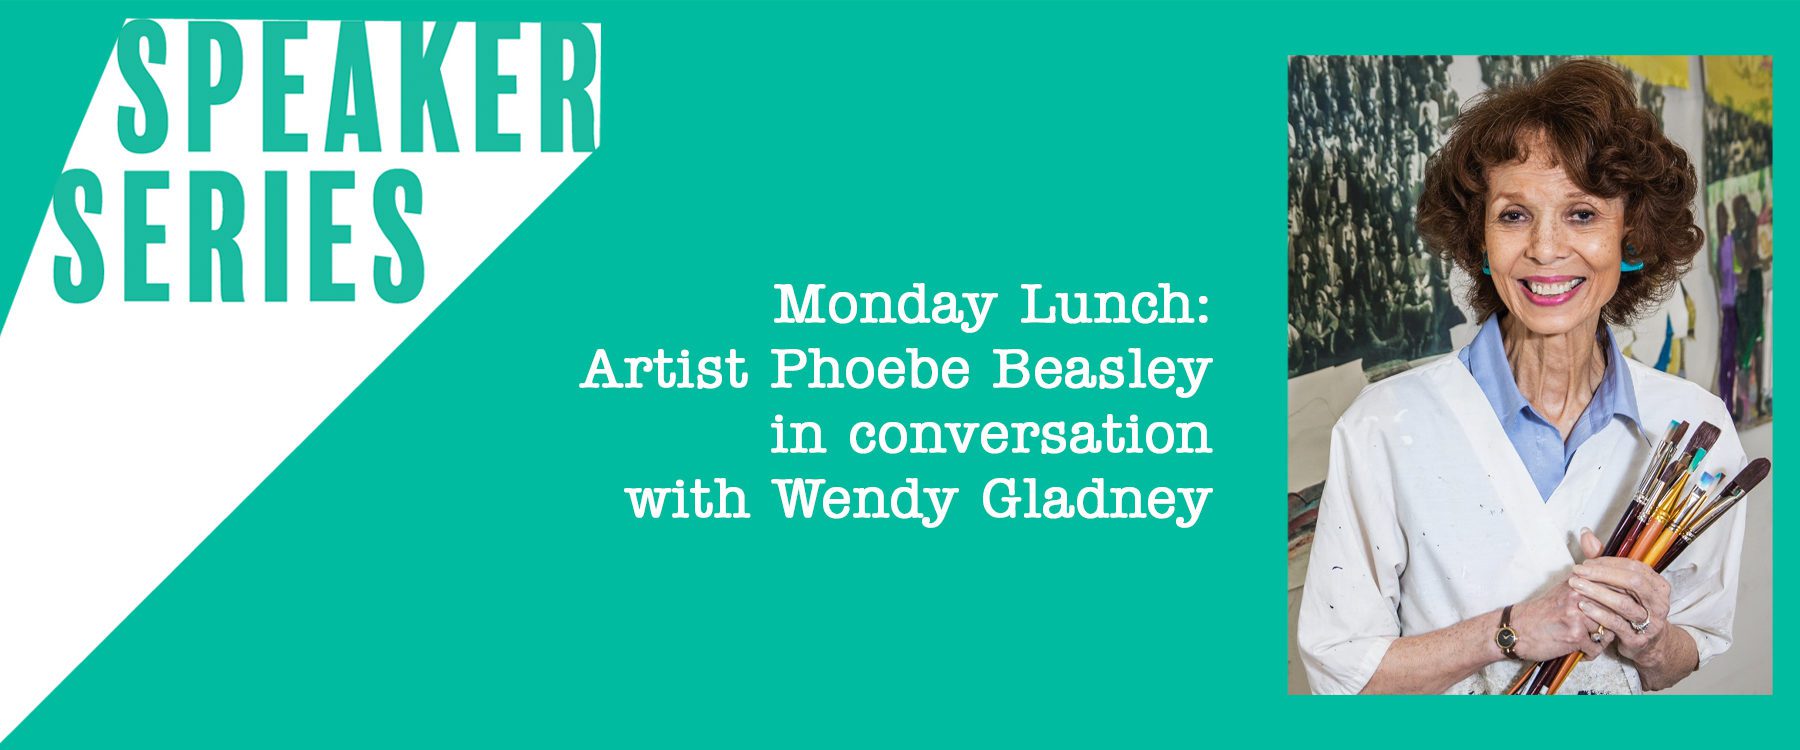 Speaker Series Monday Lunch: Artist Phoebe Beasley in conversation with Wendy Gladney